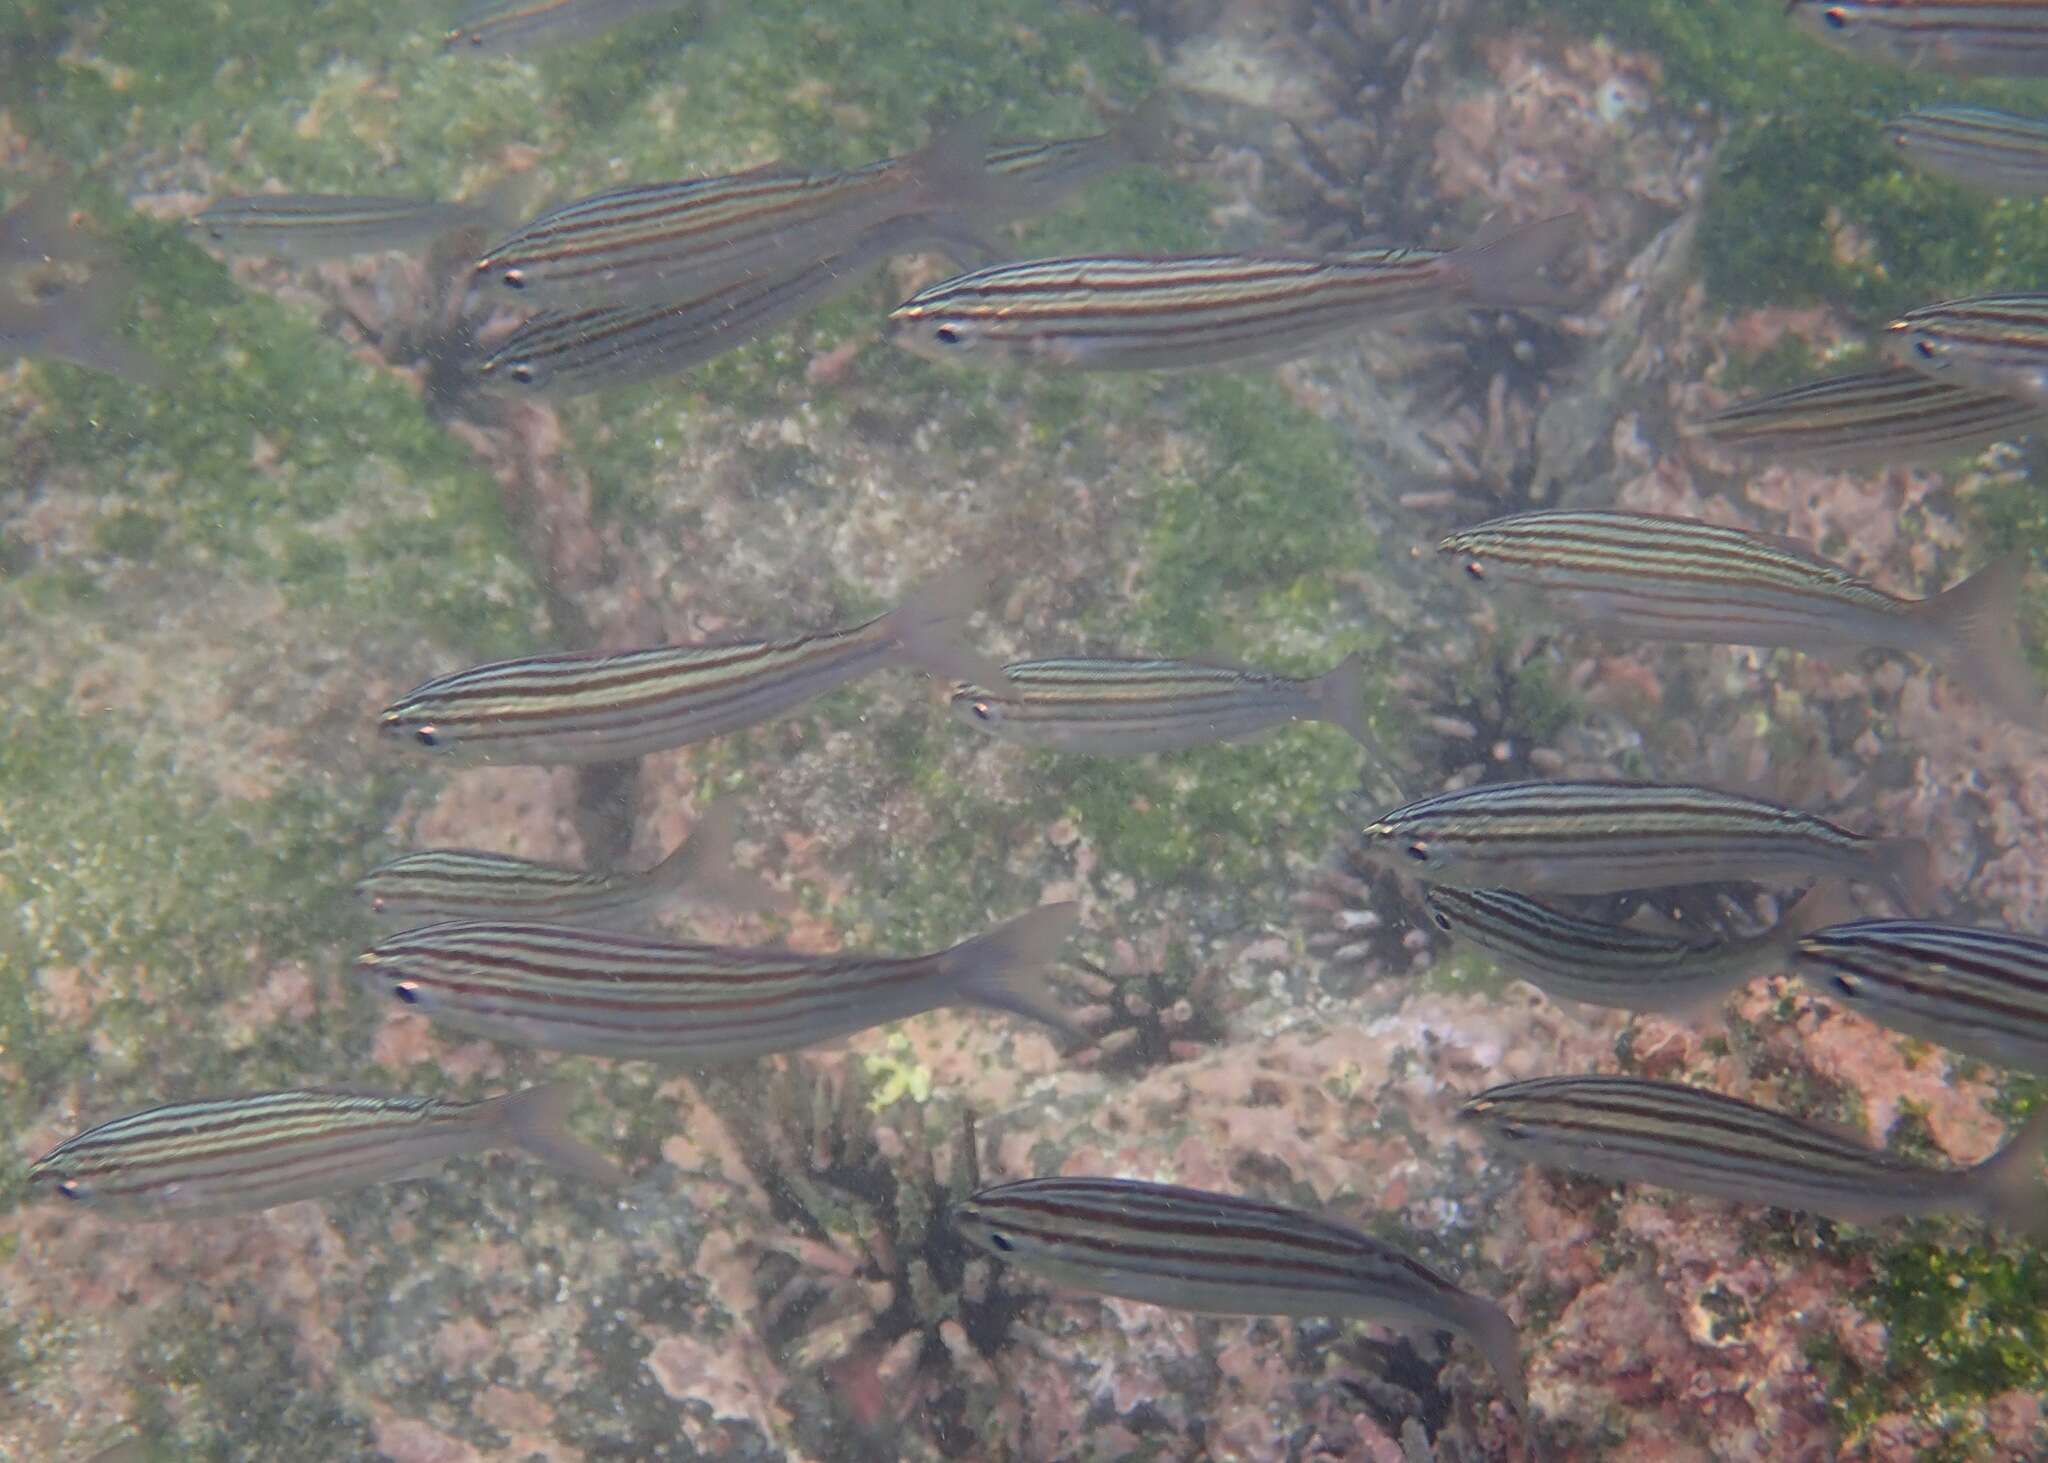 Image of Black-striped salema